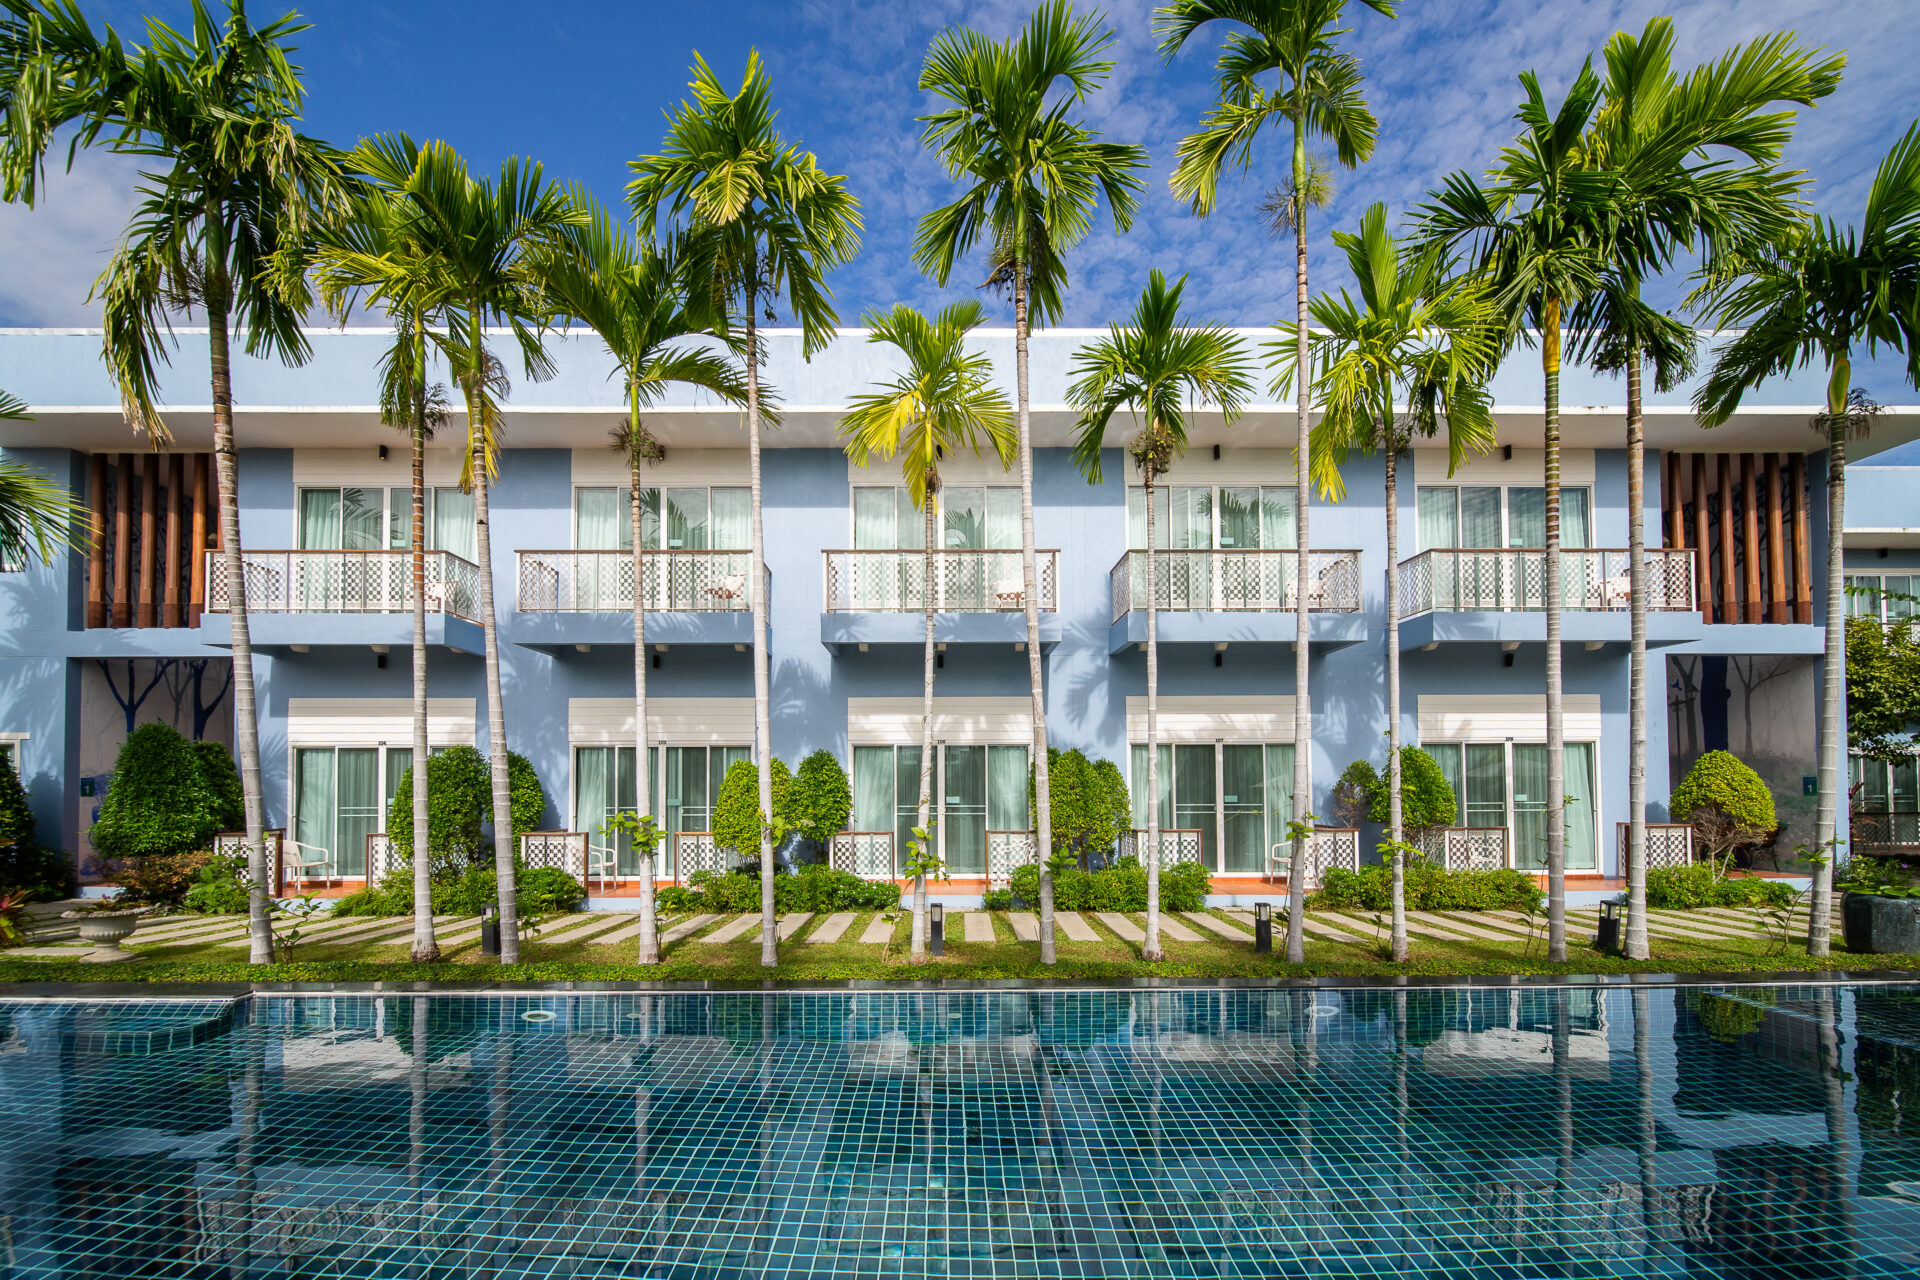 SERENATA Hotels & Resorts Group blu marine